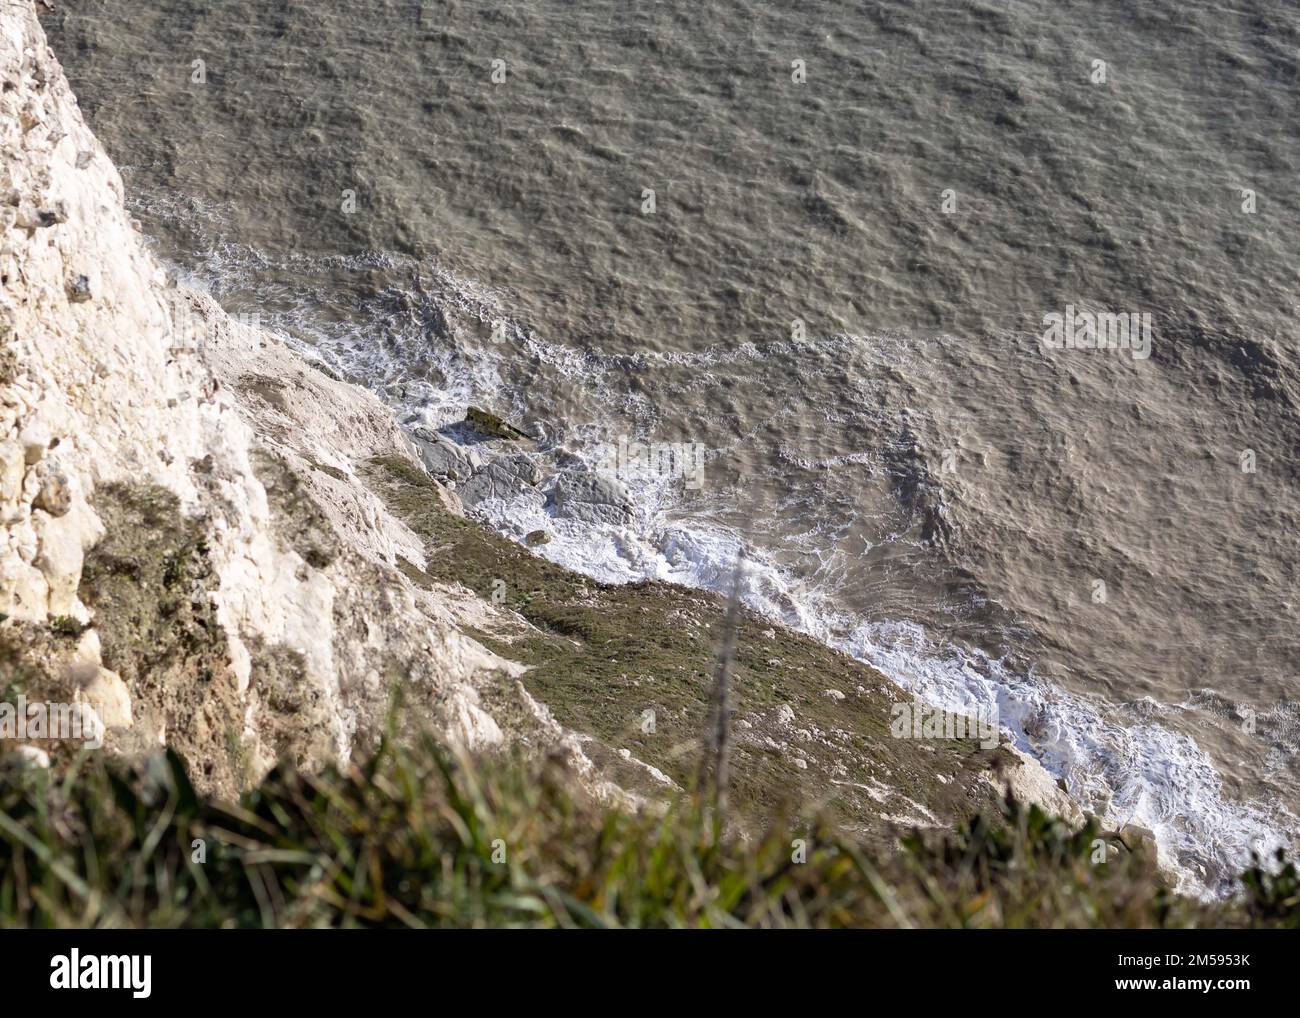 Birds eye view of waves breaking on rocks Stock Photo